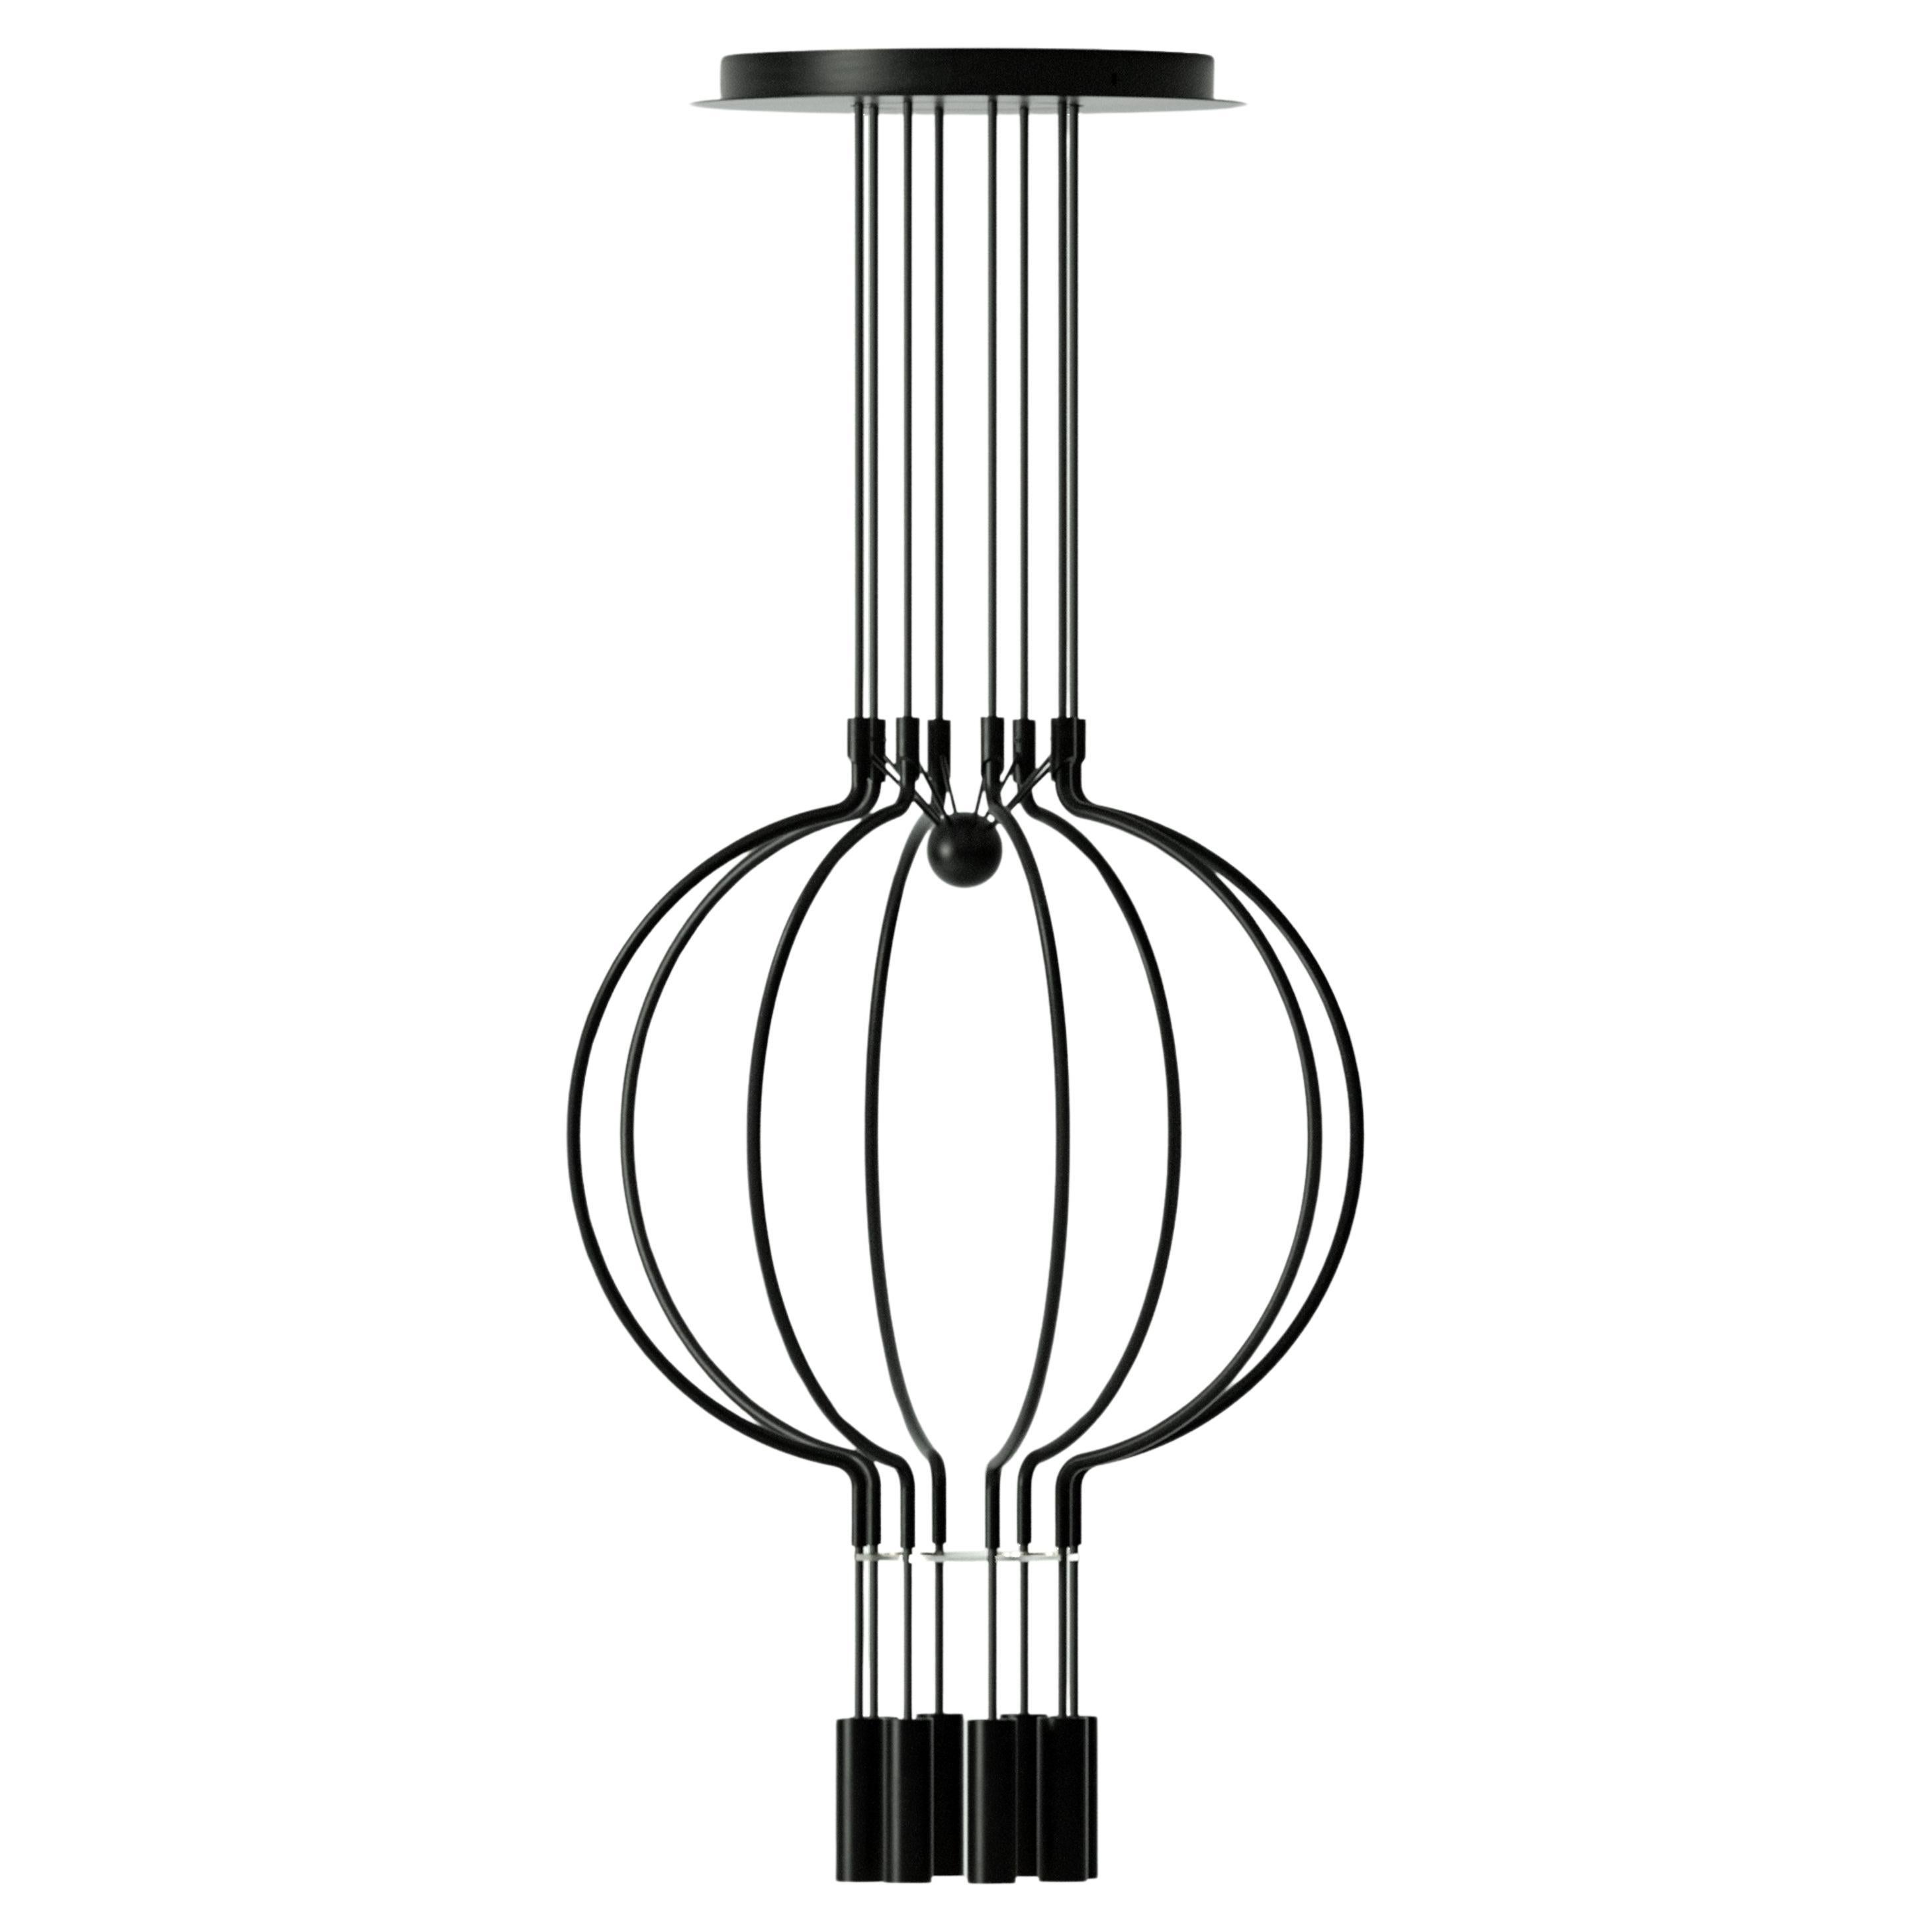 Axolight Liaison Model P8 Pendant Lamp in Black/Black by Sara Moroni For Sale